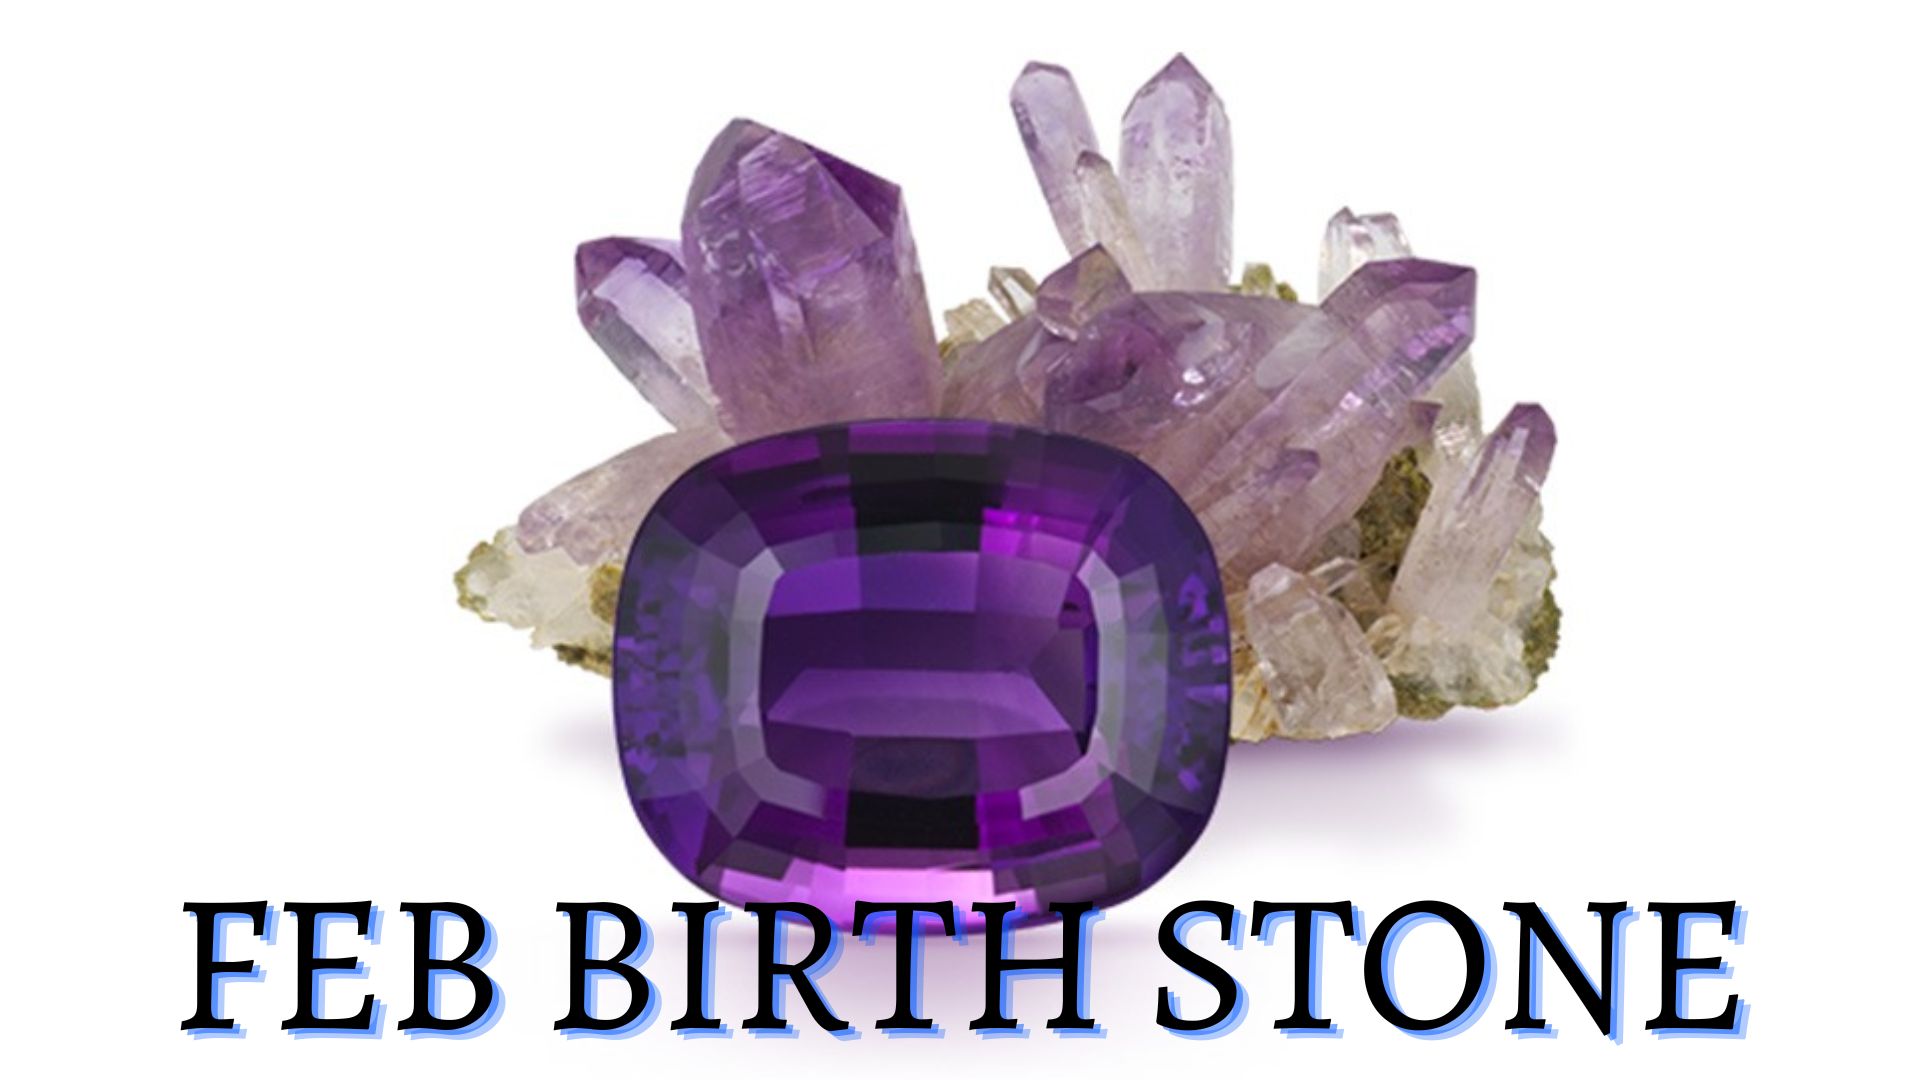 Feb Birth Stone - Member Of The Quartz Family